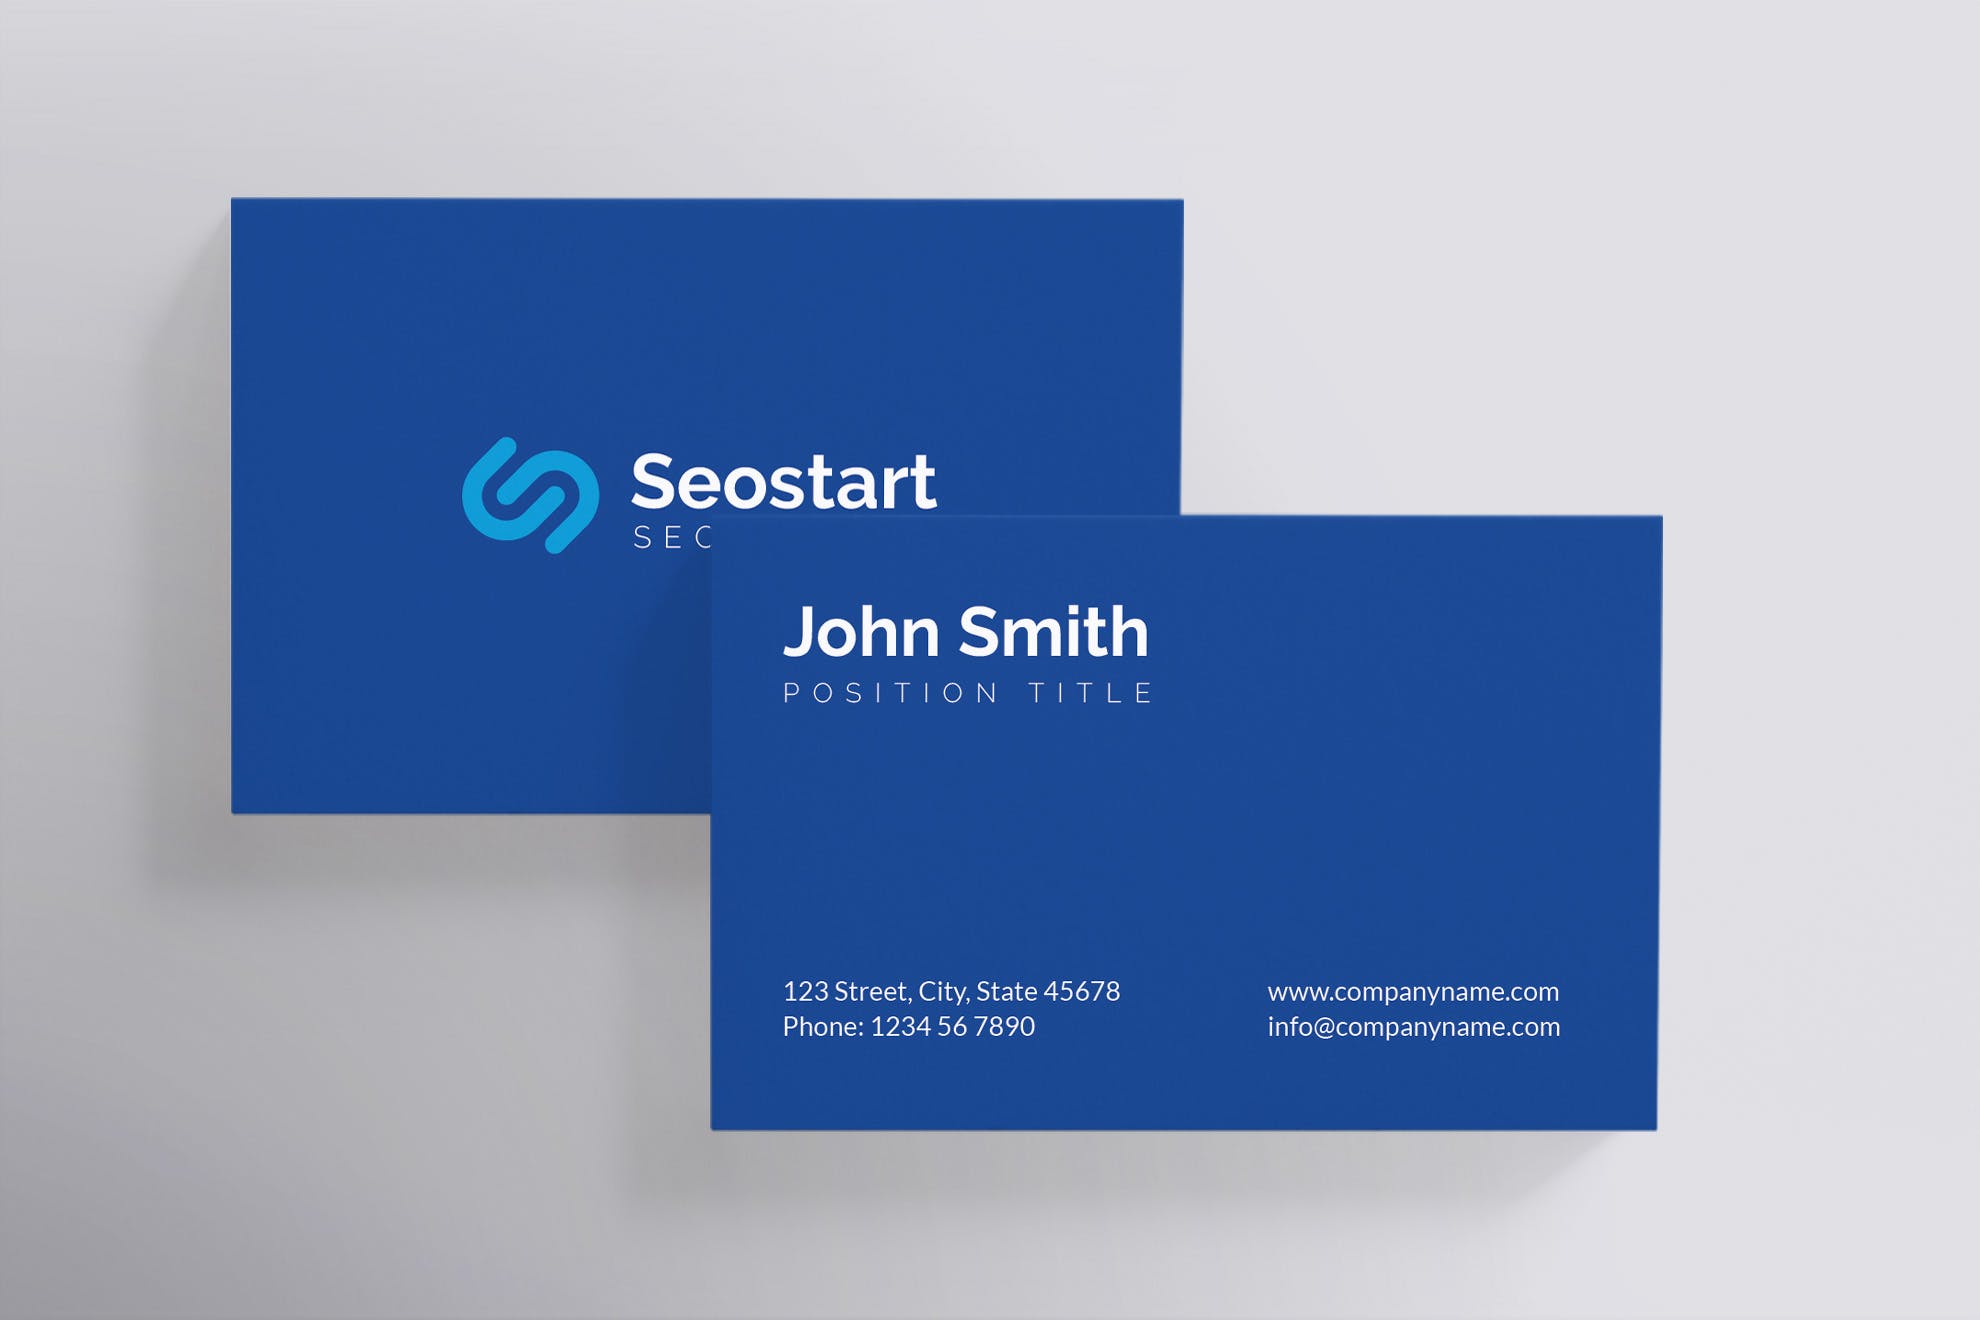 SEO/SEM推广服务企业名片设计模板 SEO Agency Business Card插图(2)